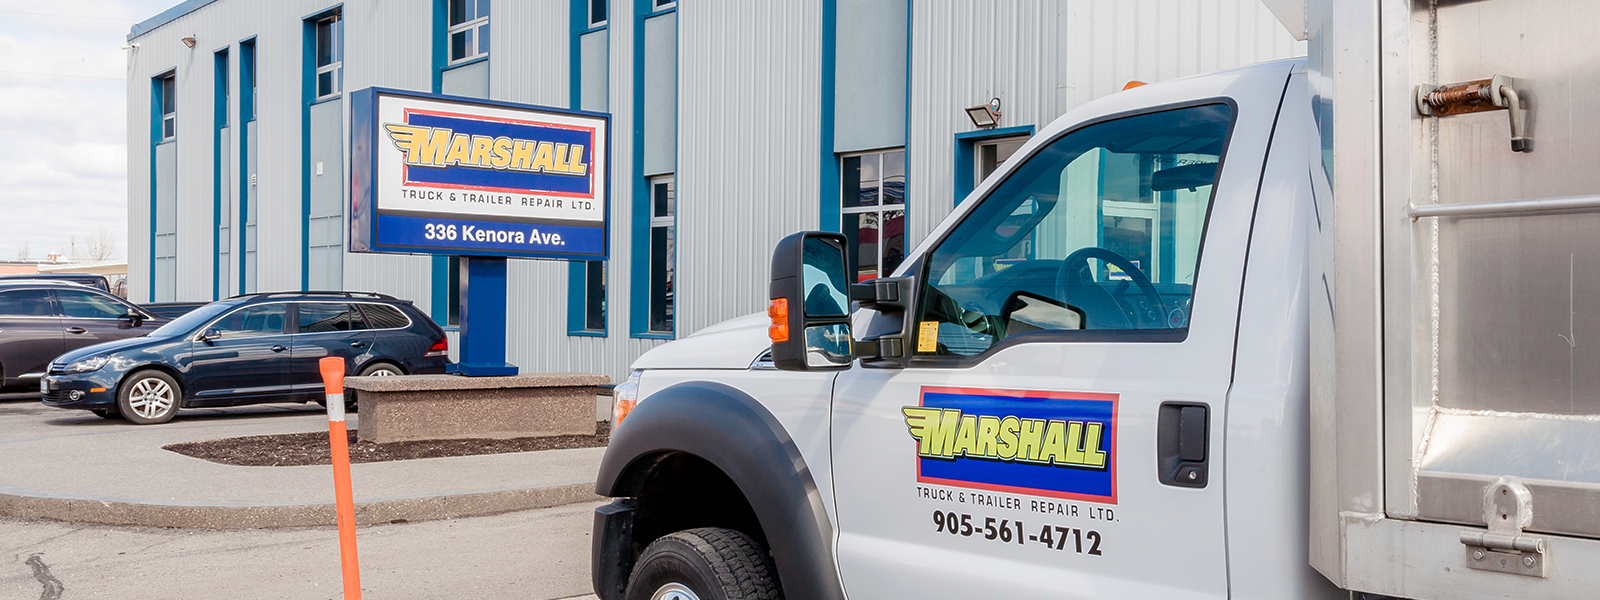 Marshall Truck & Trailer Repair Hamilton